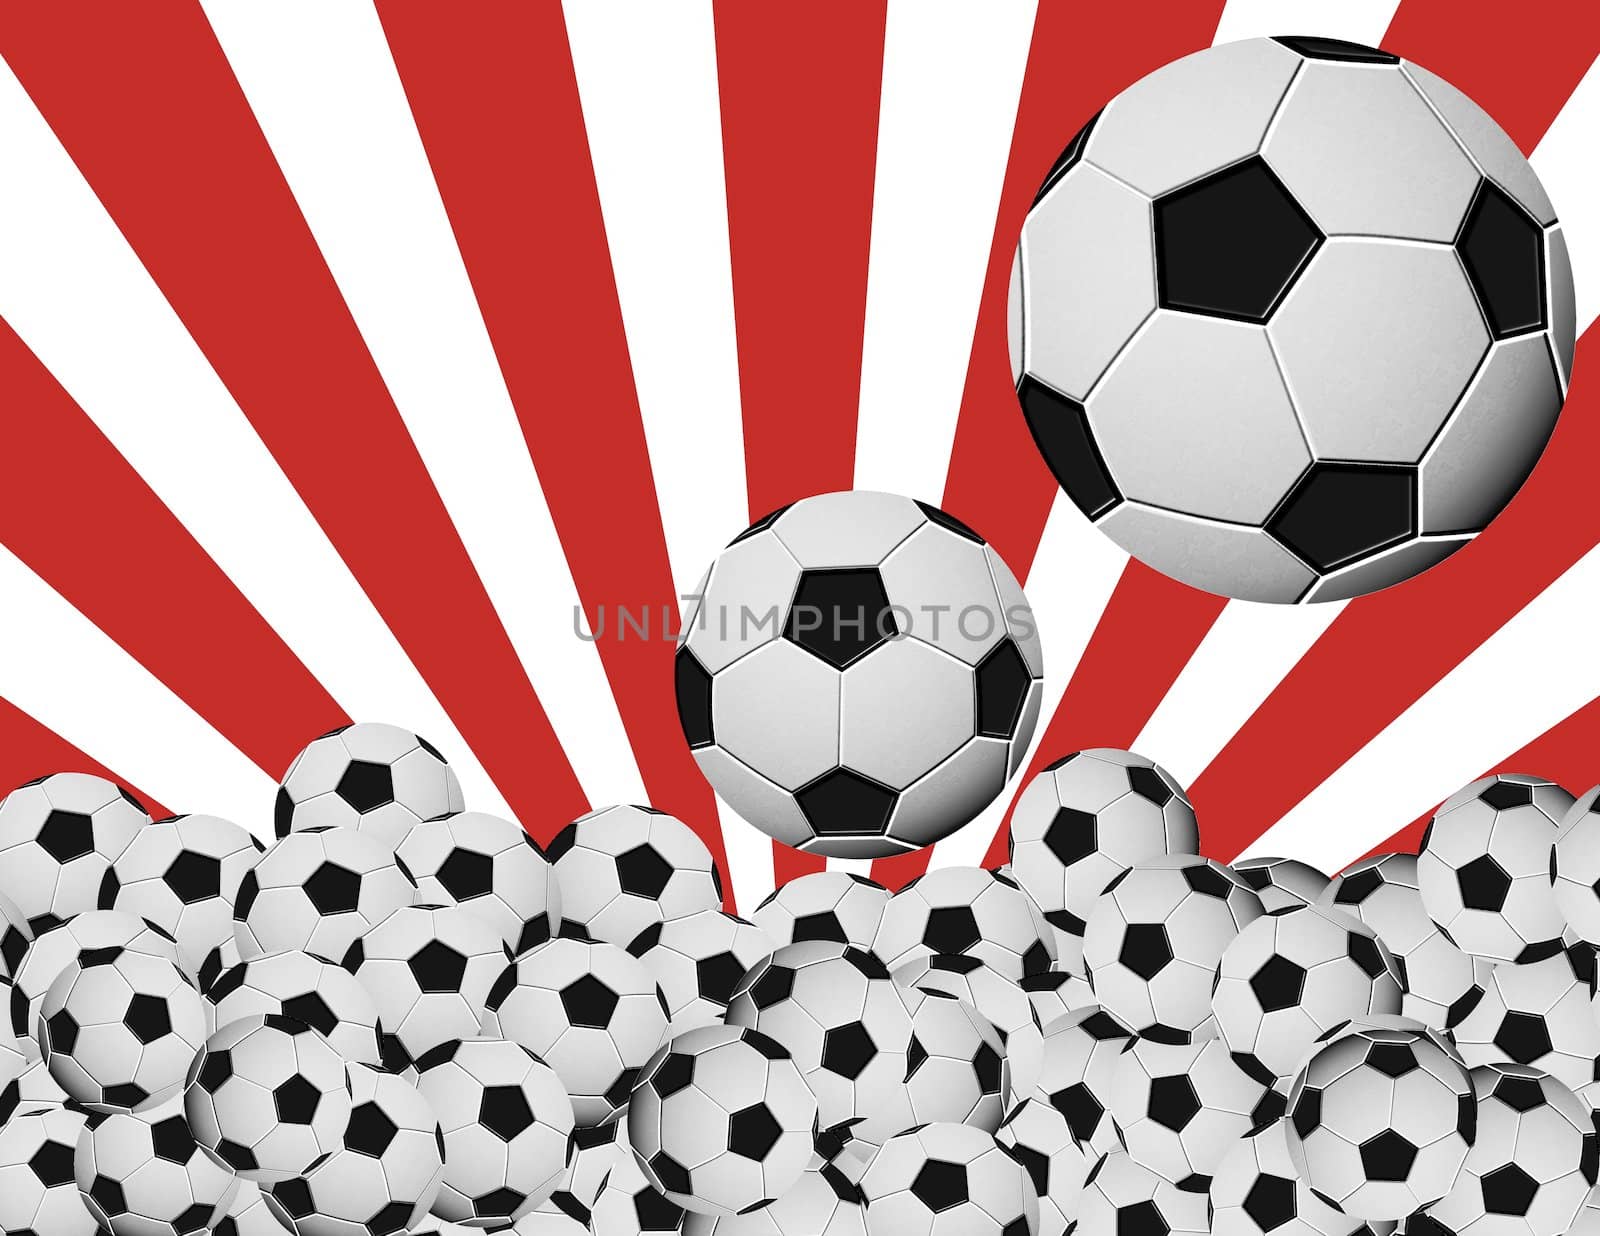 soccer mania by hayaship